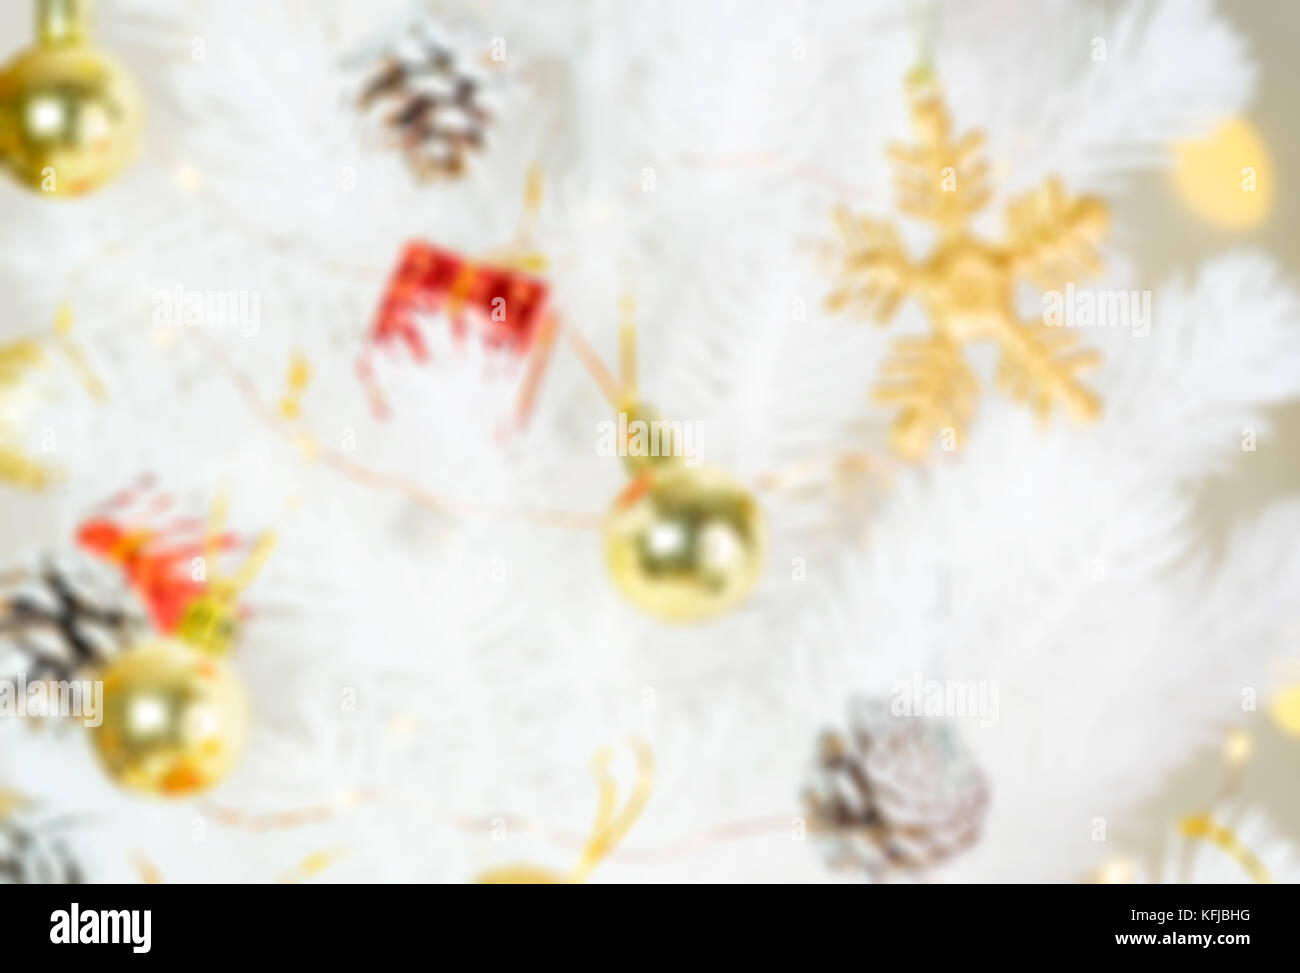 Blur background of Christmas decoration object hanging on white xmas tree,Holiday season Stock Photo